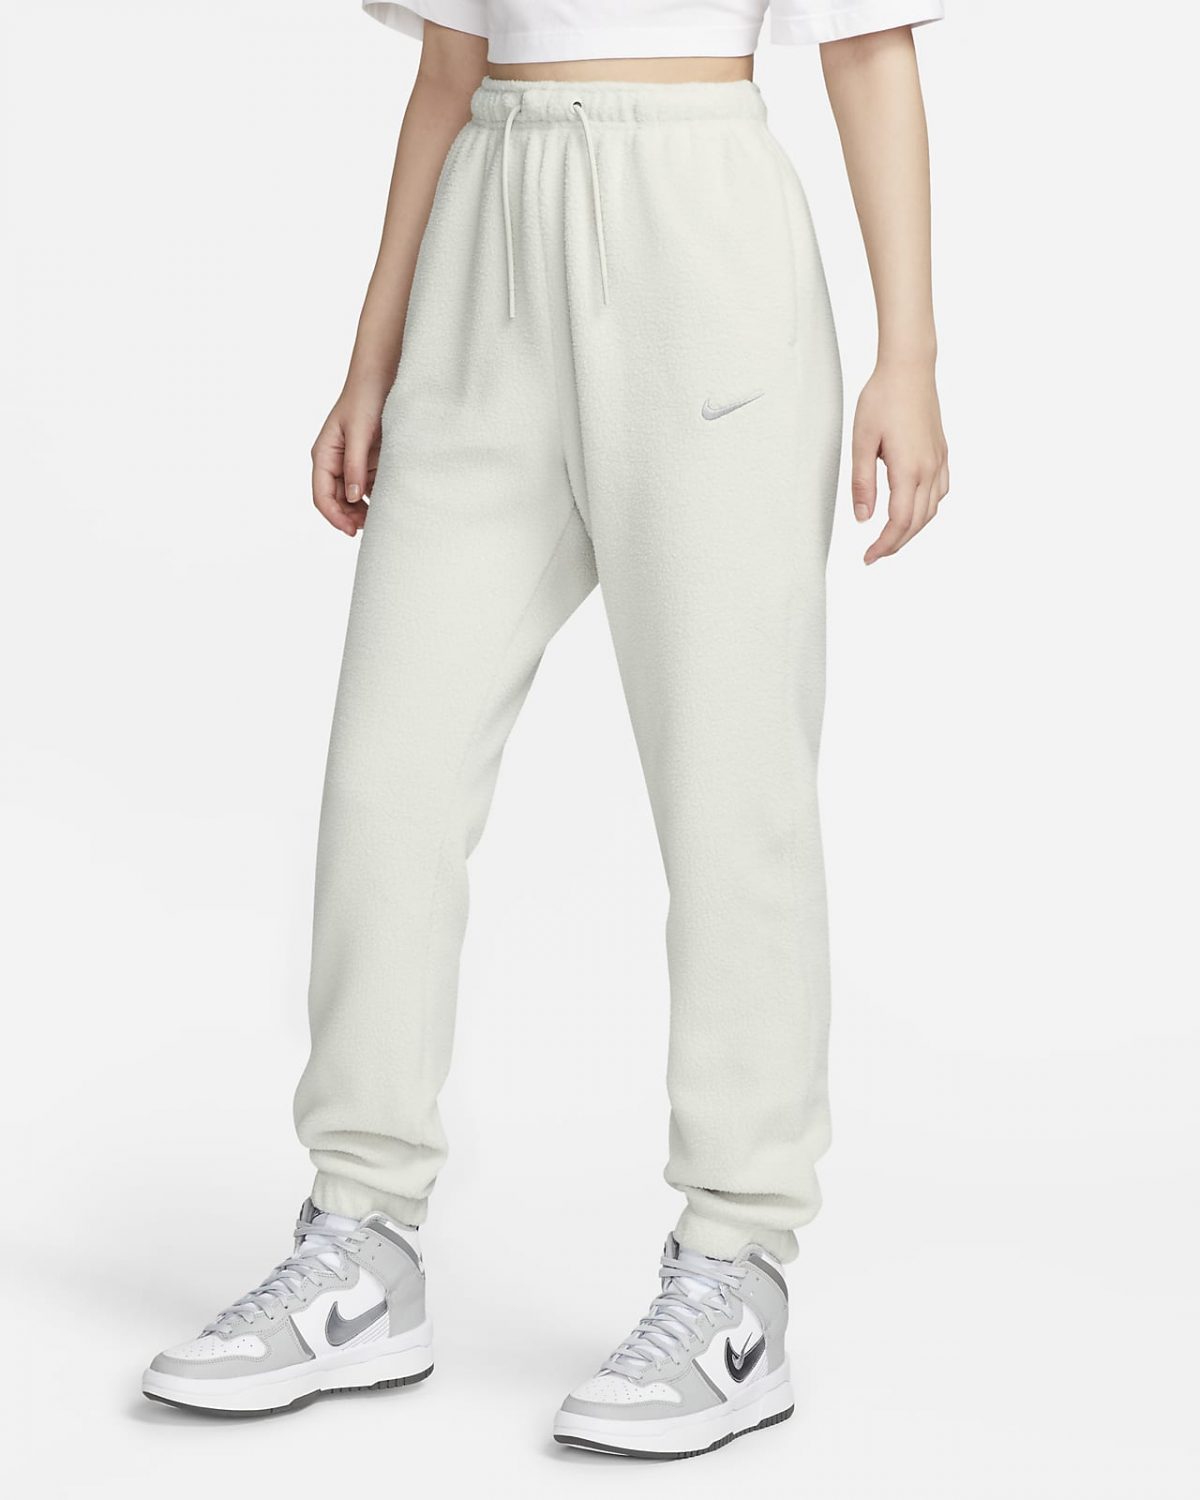 Женские брюки Nike Sportswear Plush фото